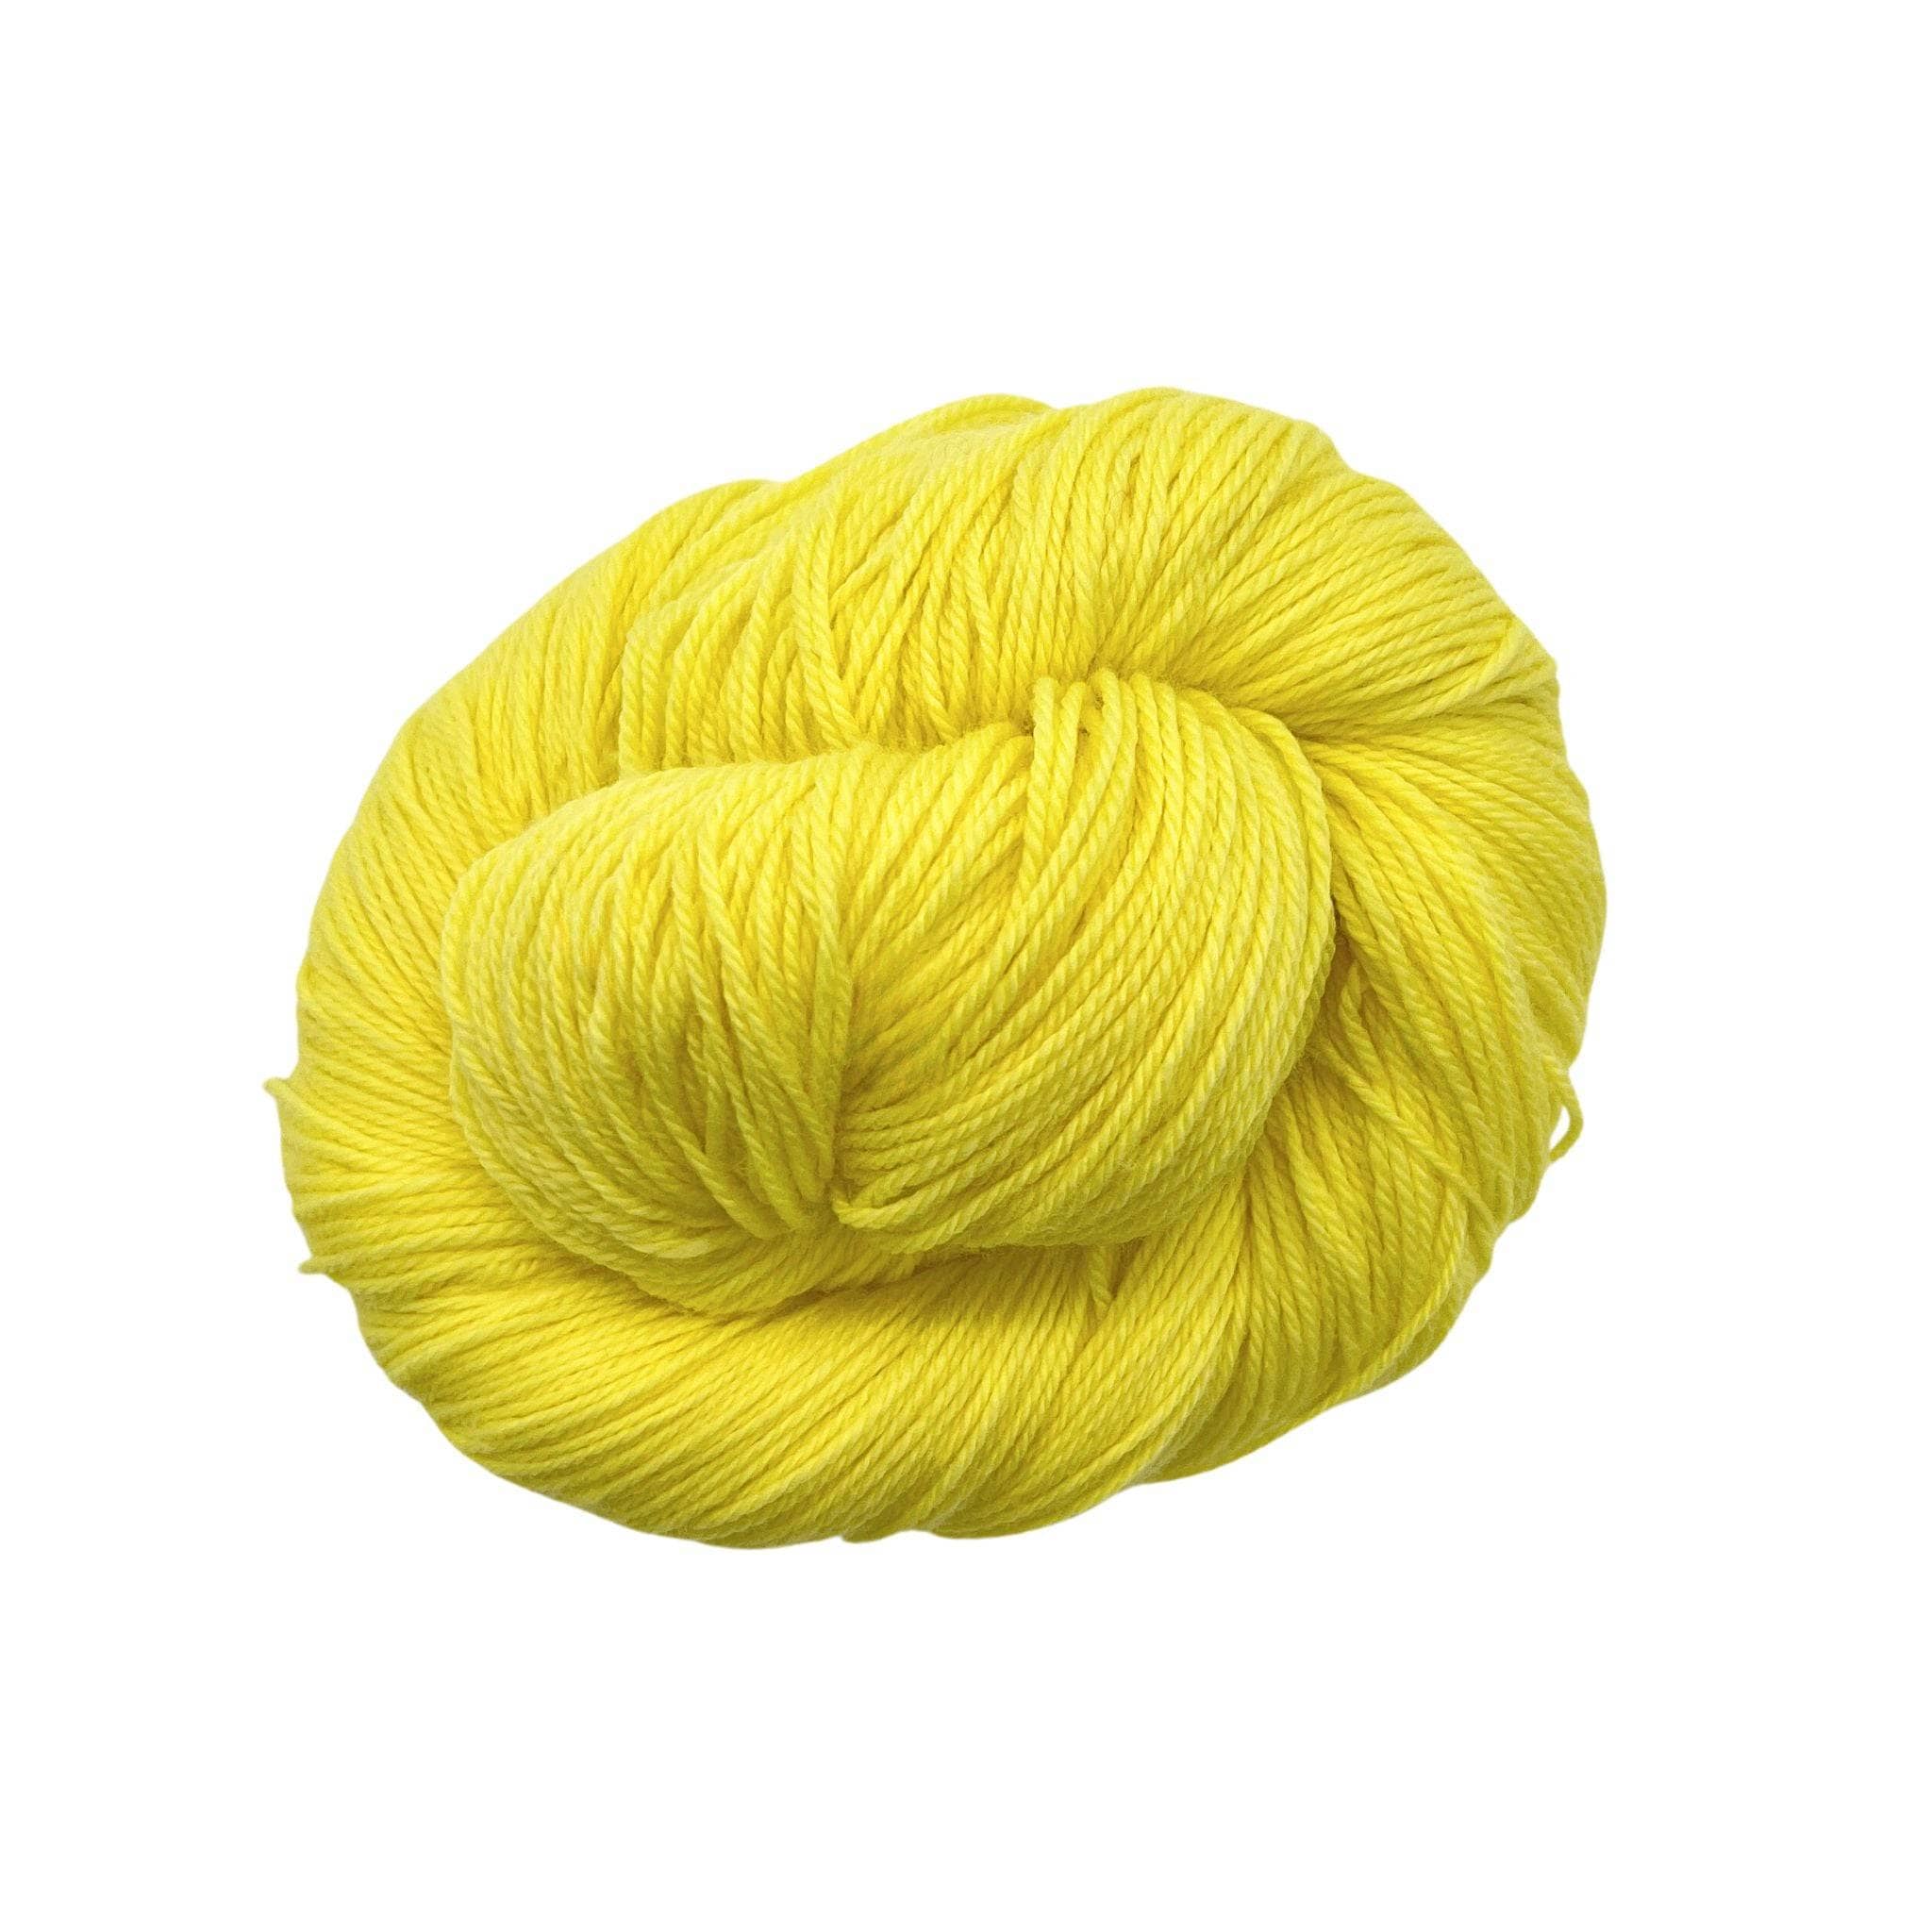 Best Merino Wool for Knitting and Crocheting –